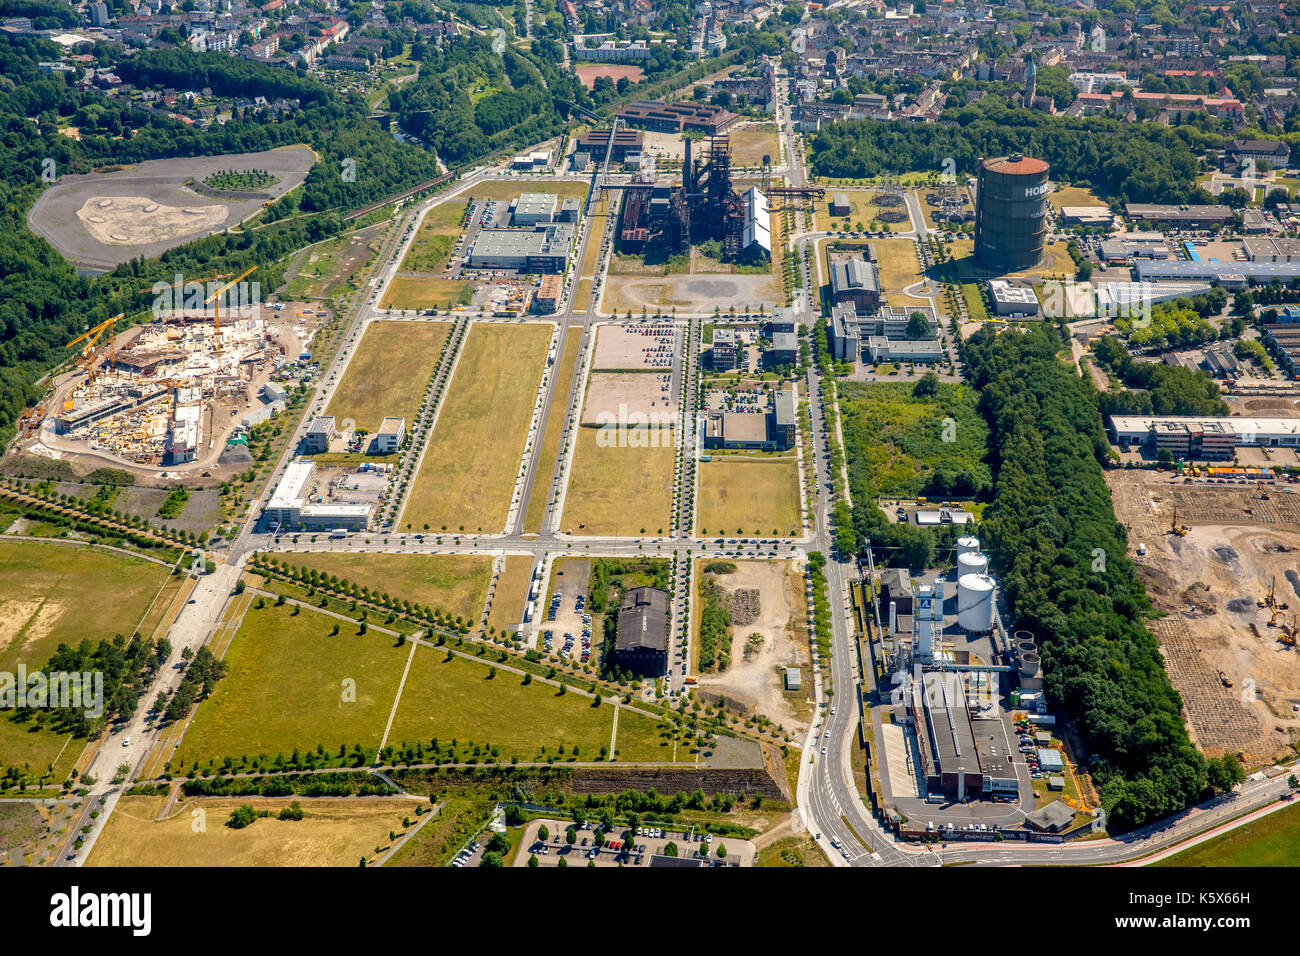 IIndustrial area, industrial district, industrial site, industrial site, phoenix, west, Dortmund, Ruhr area, North Rhine-Westphalia, Germany, Dortmund Stock Photo